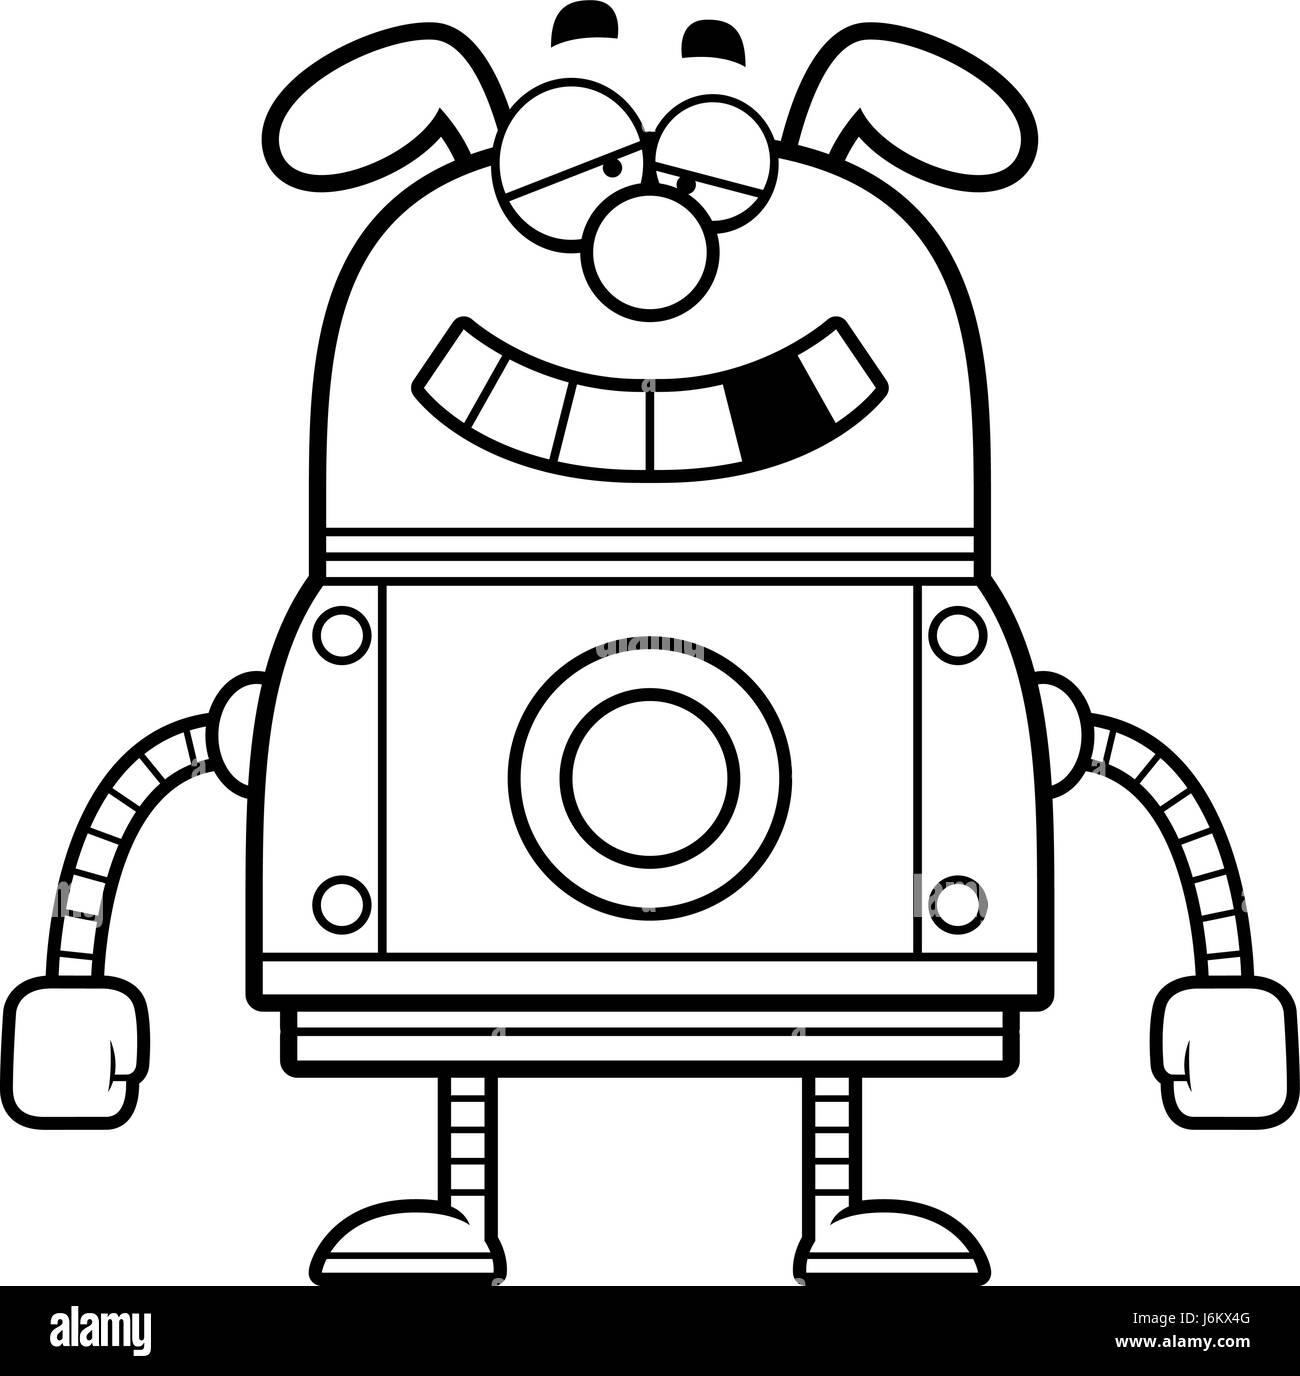 A cartoon illustration of a malfunctioning robot dog. Stock Vector